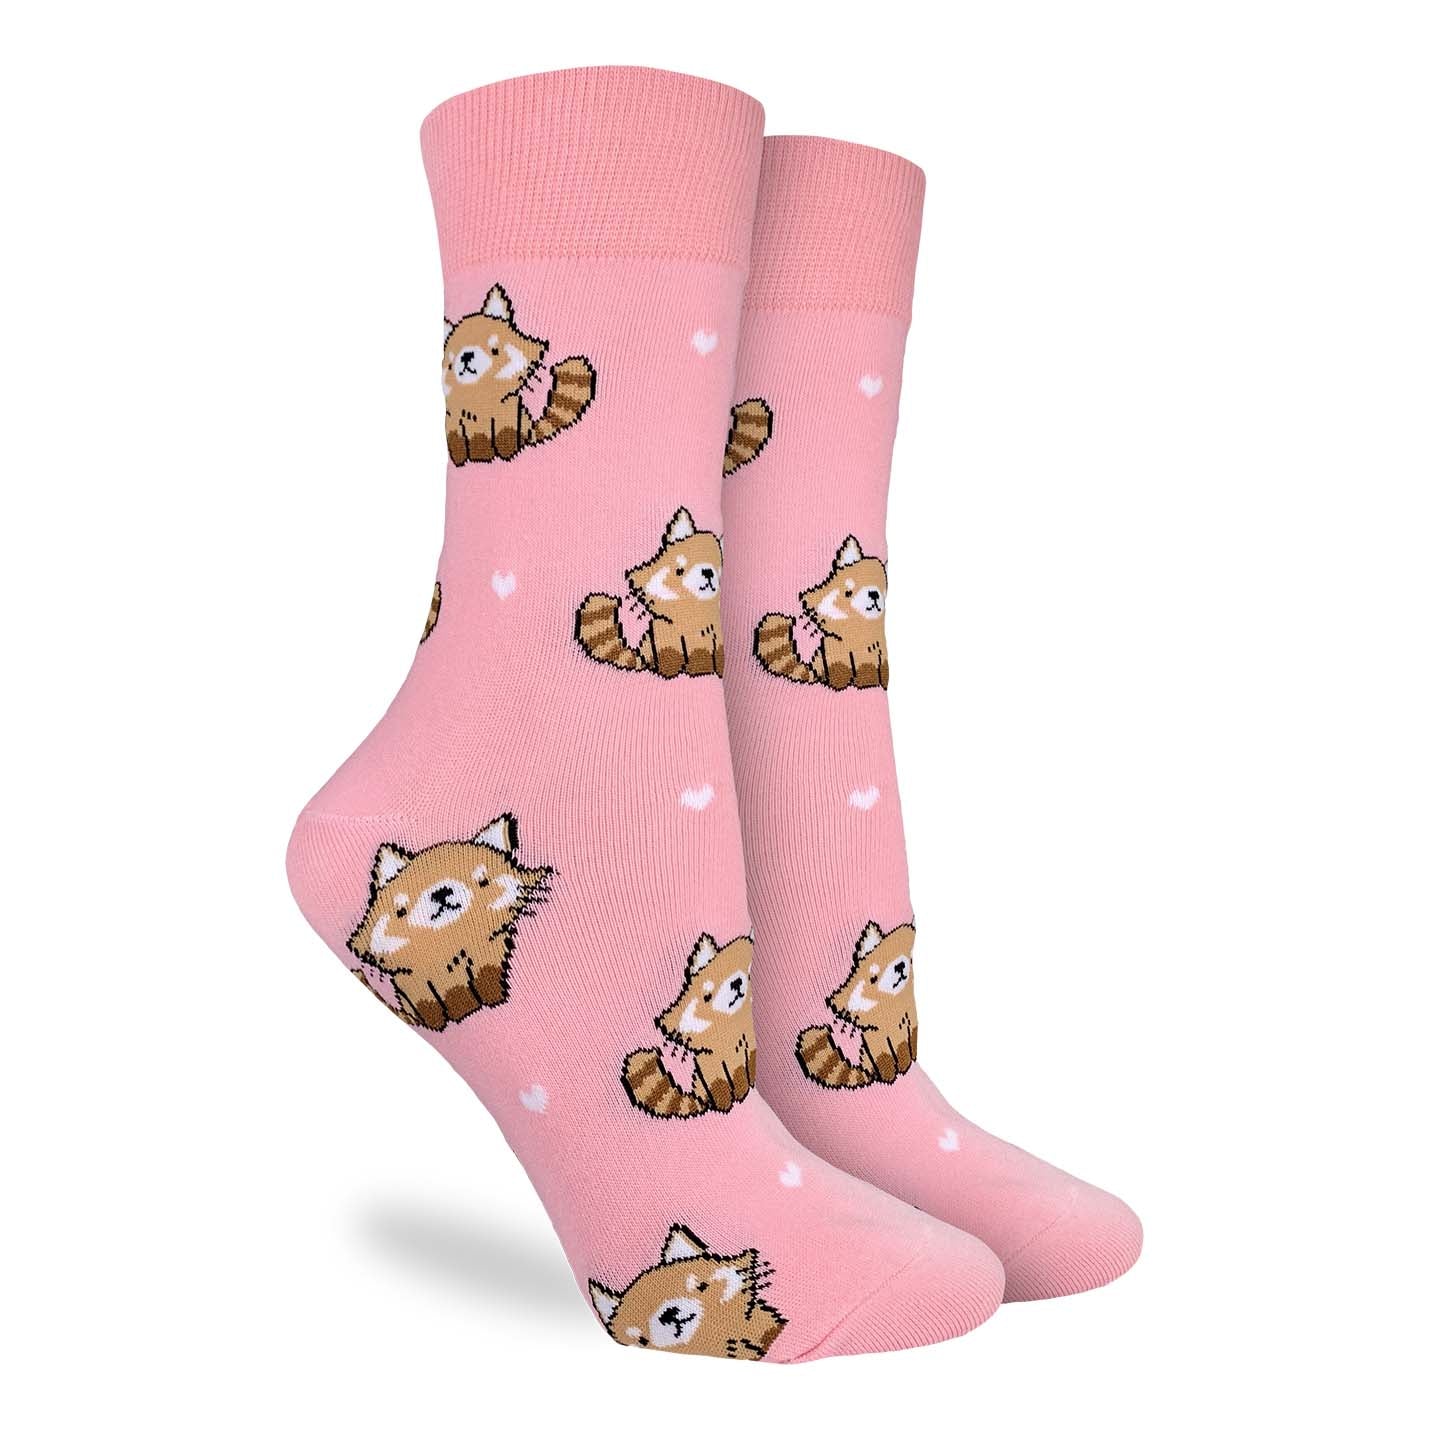 Women's Cute Red Pandas Socks – Good Luck Sock